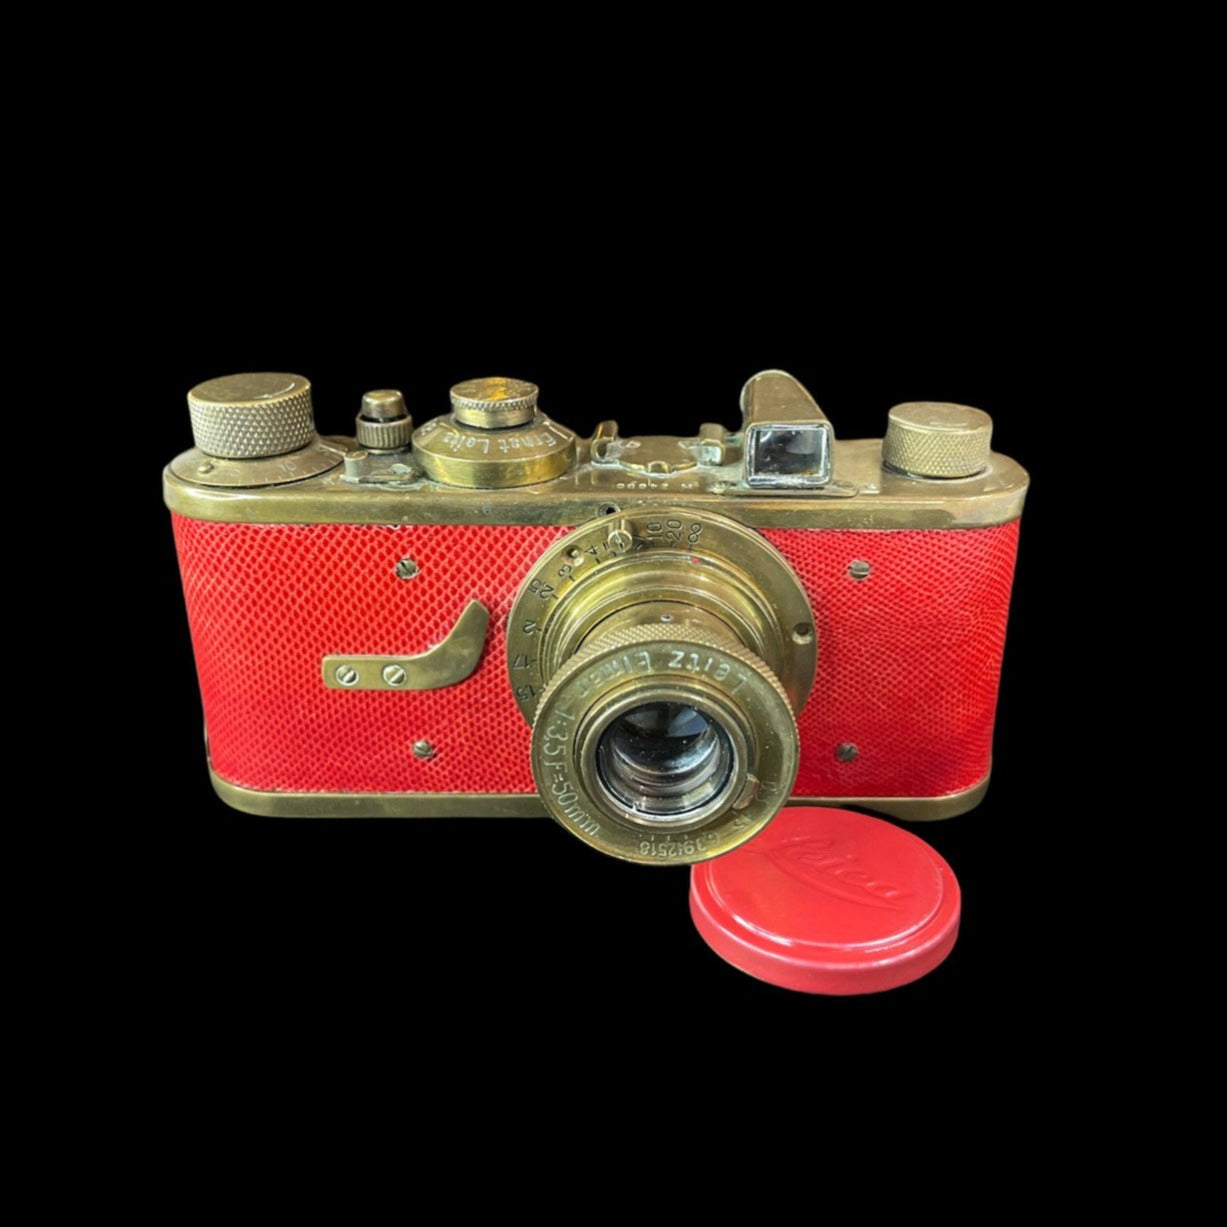 Leica Luxus Copy NFS Red Skin B#34806